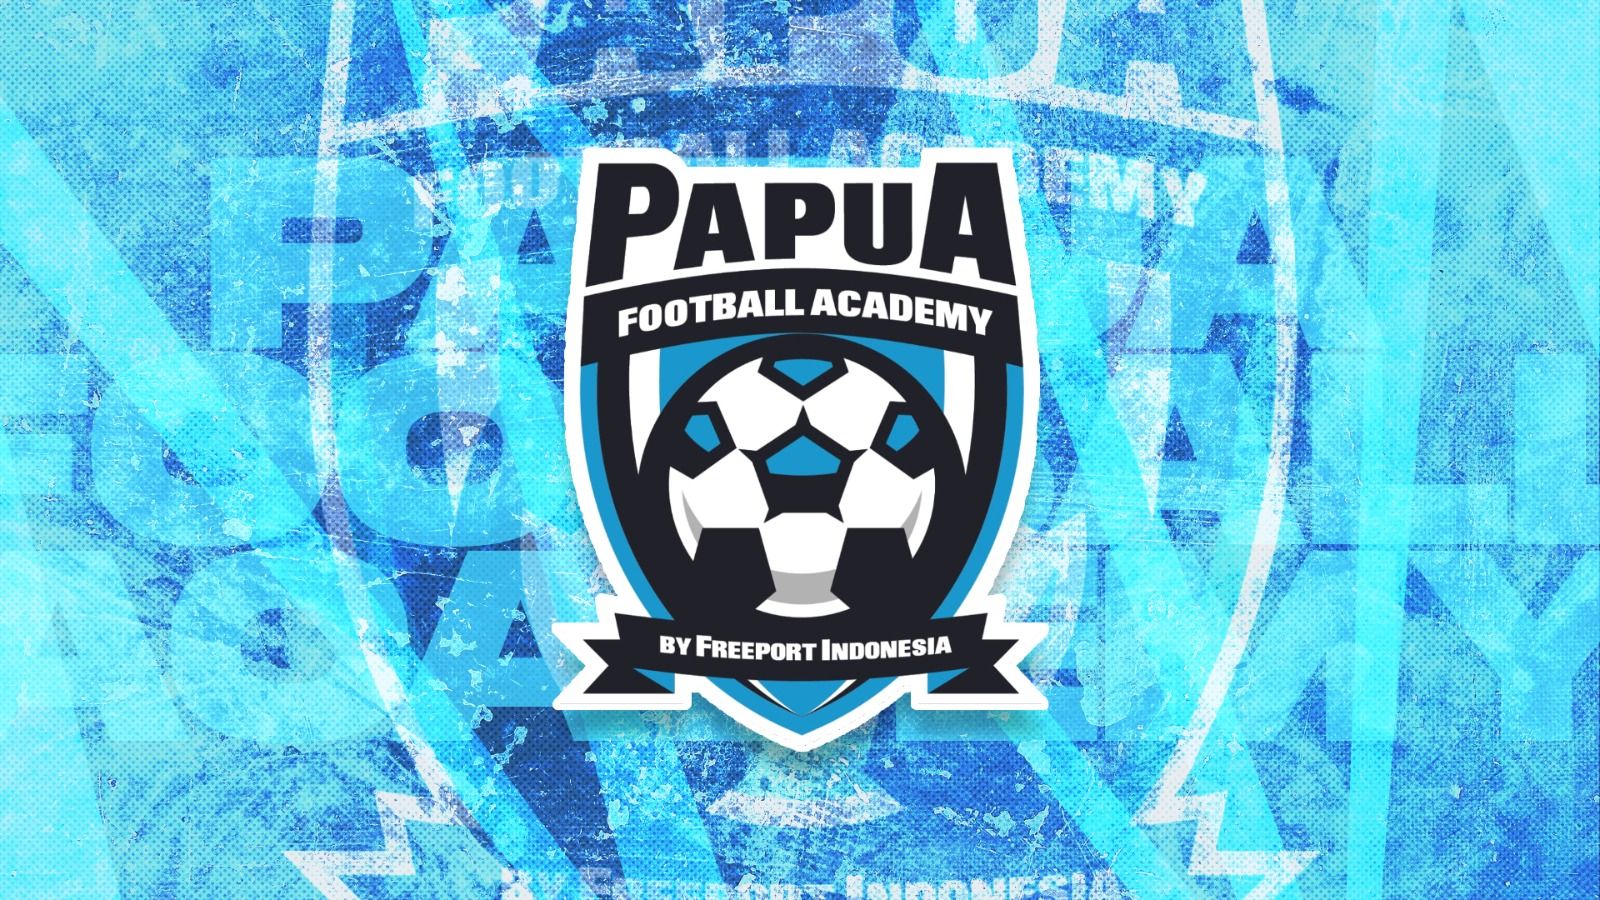 Papua Football Academy by Freeport Indonesia. (Dede Mauladi/Skor.id)